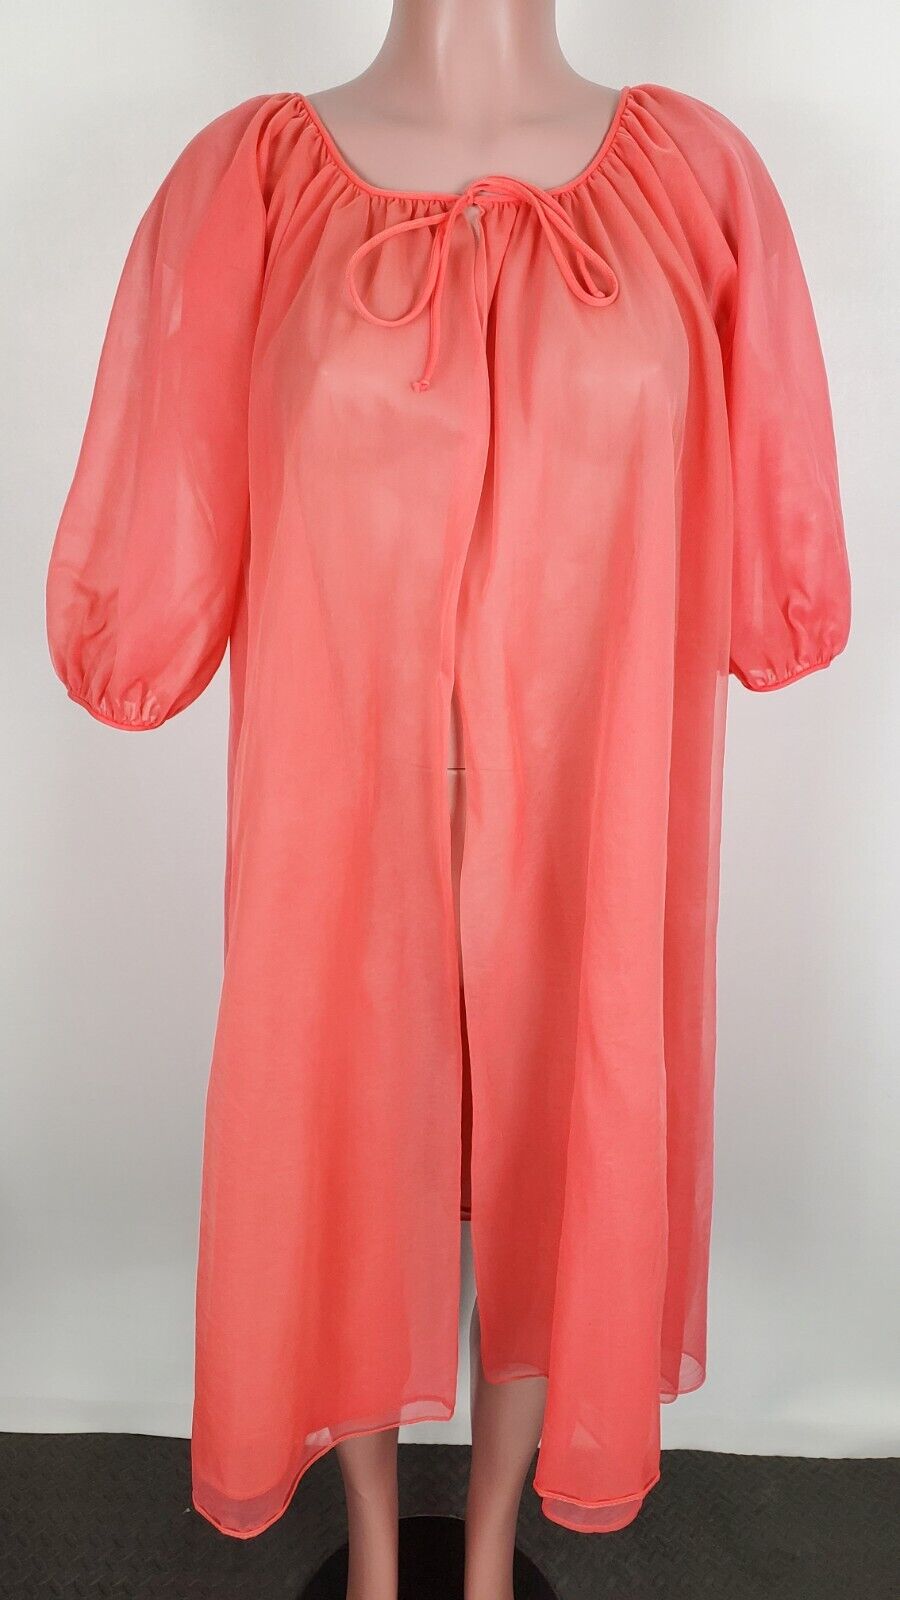 Womens Vintage Fantasy Lingerie Peignoir Robe Sheer Coral Chiffon Medium 36